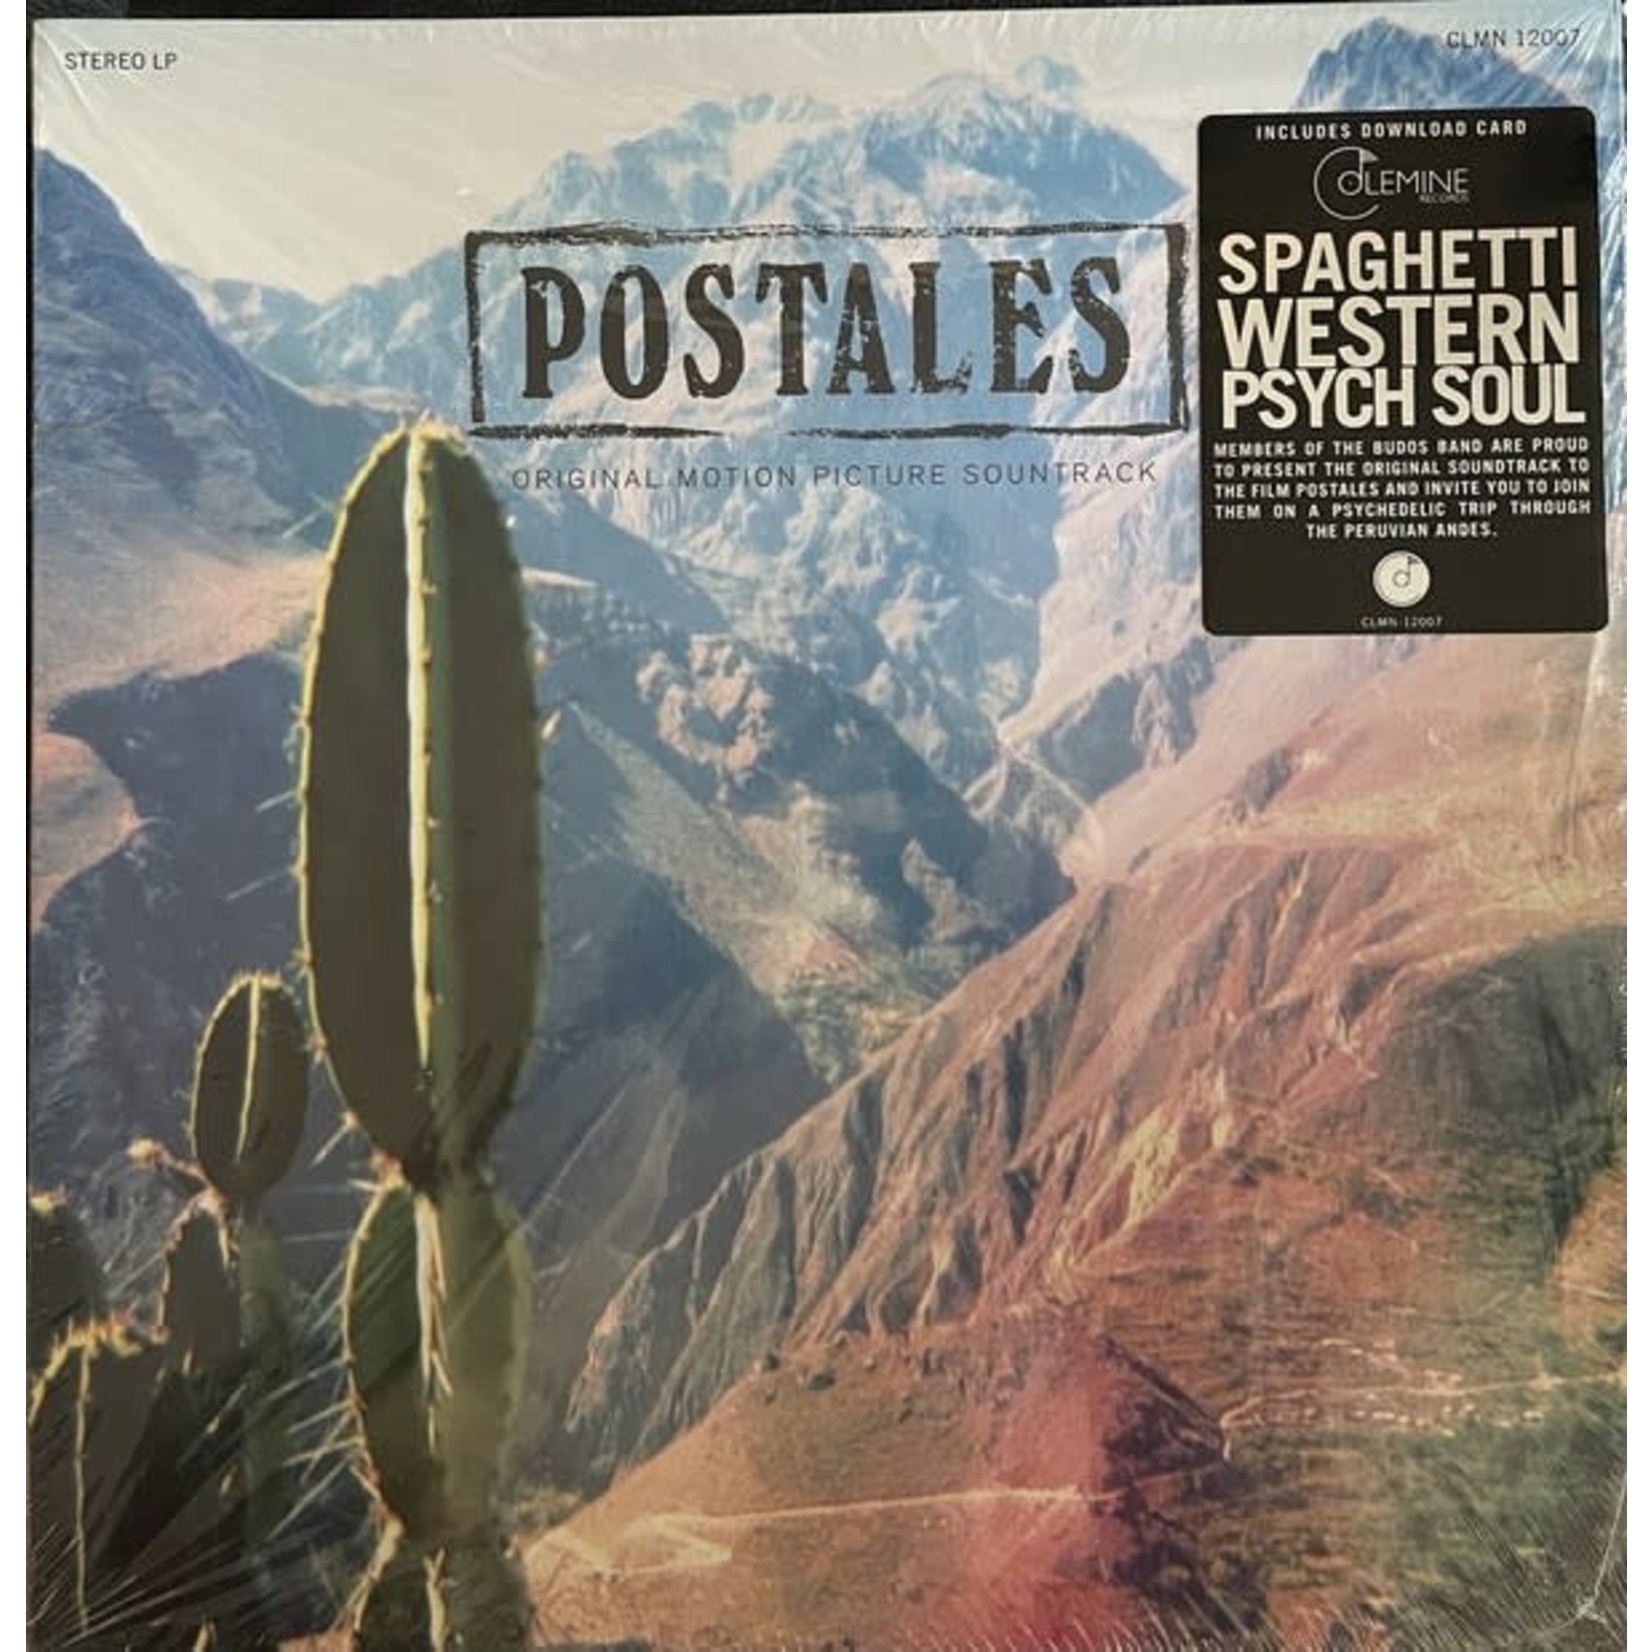 Colemine Los Sospechos - Postales OST (LP)